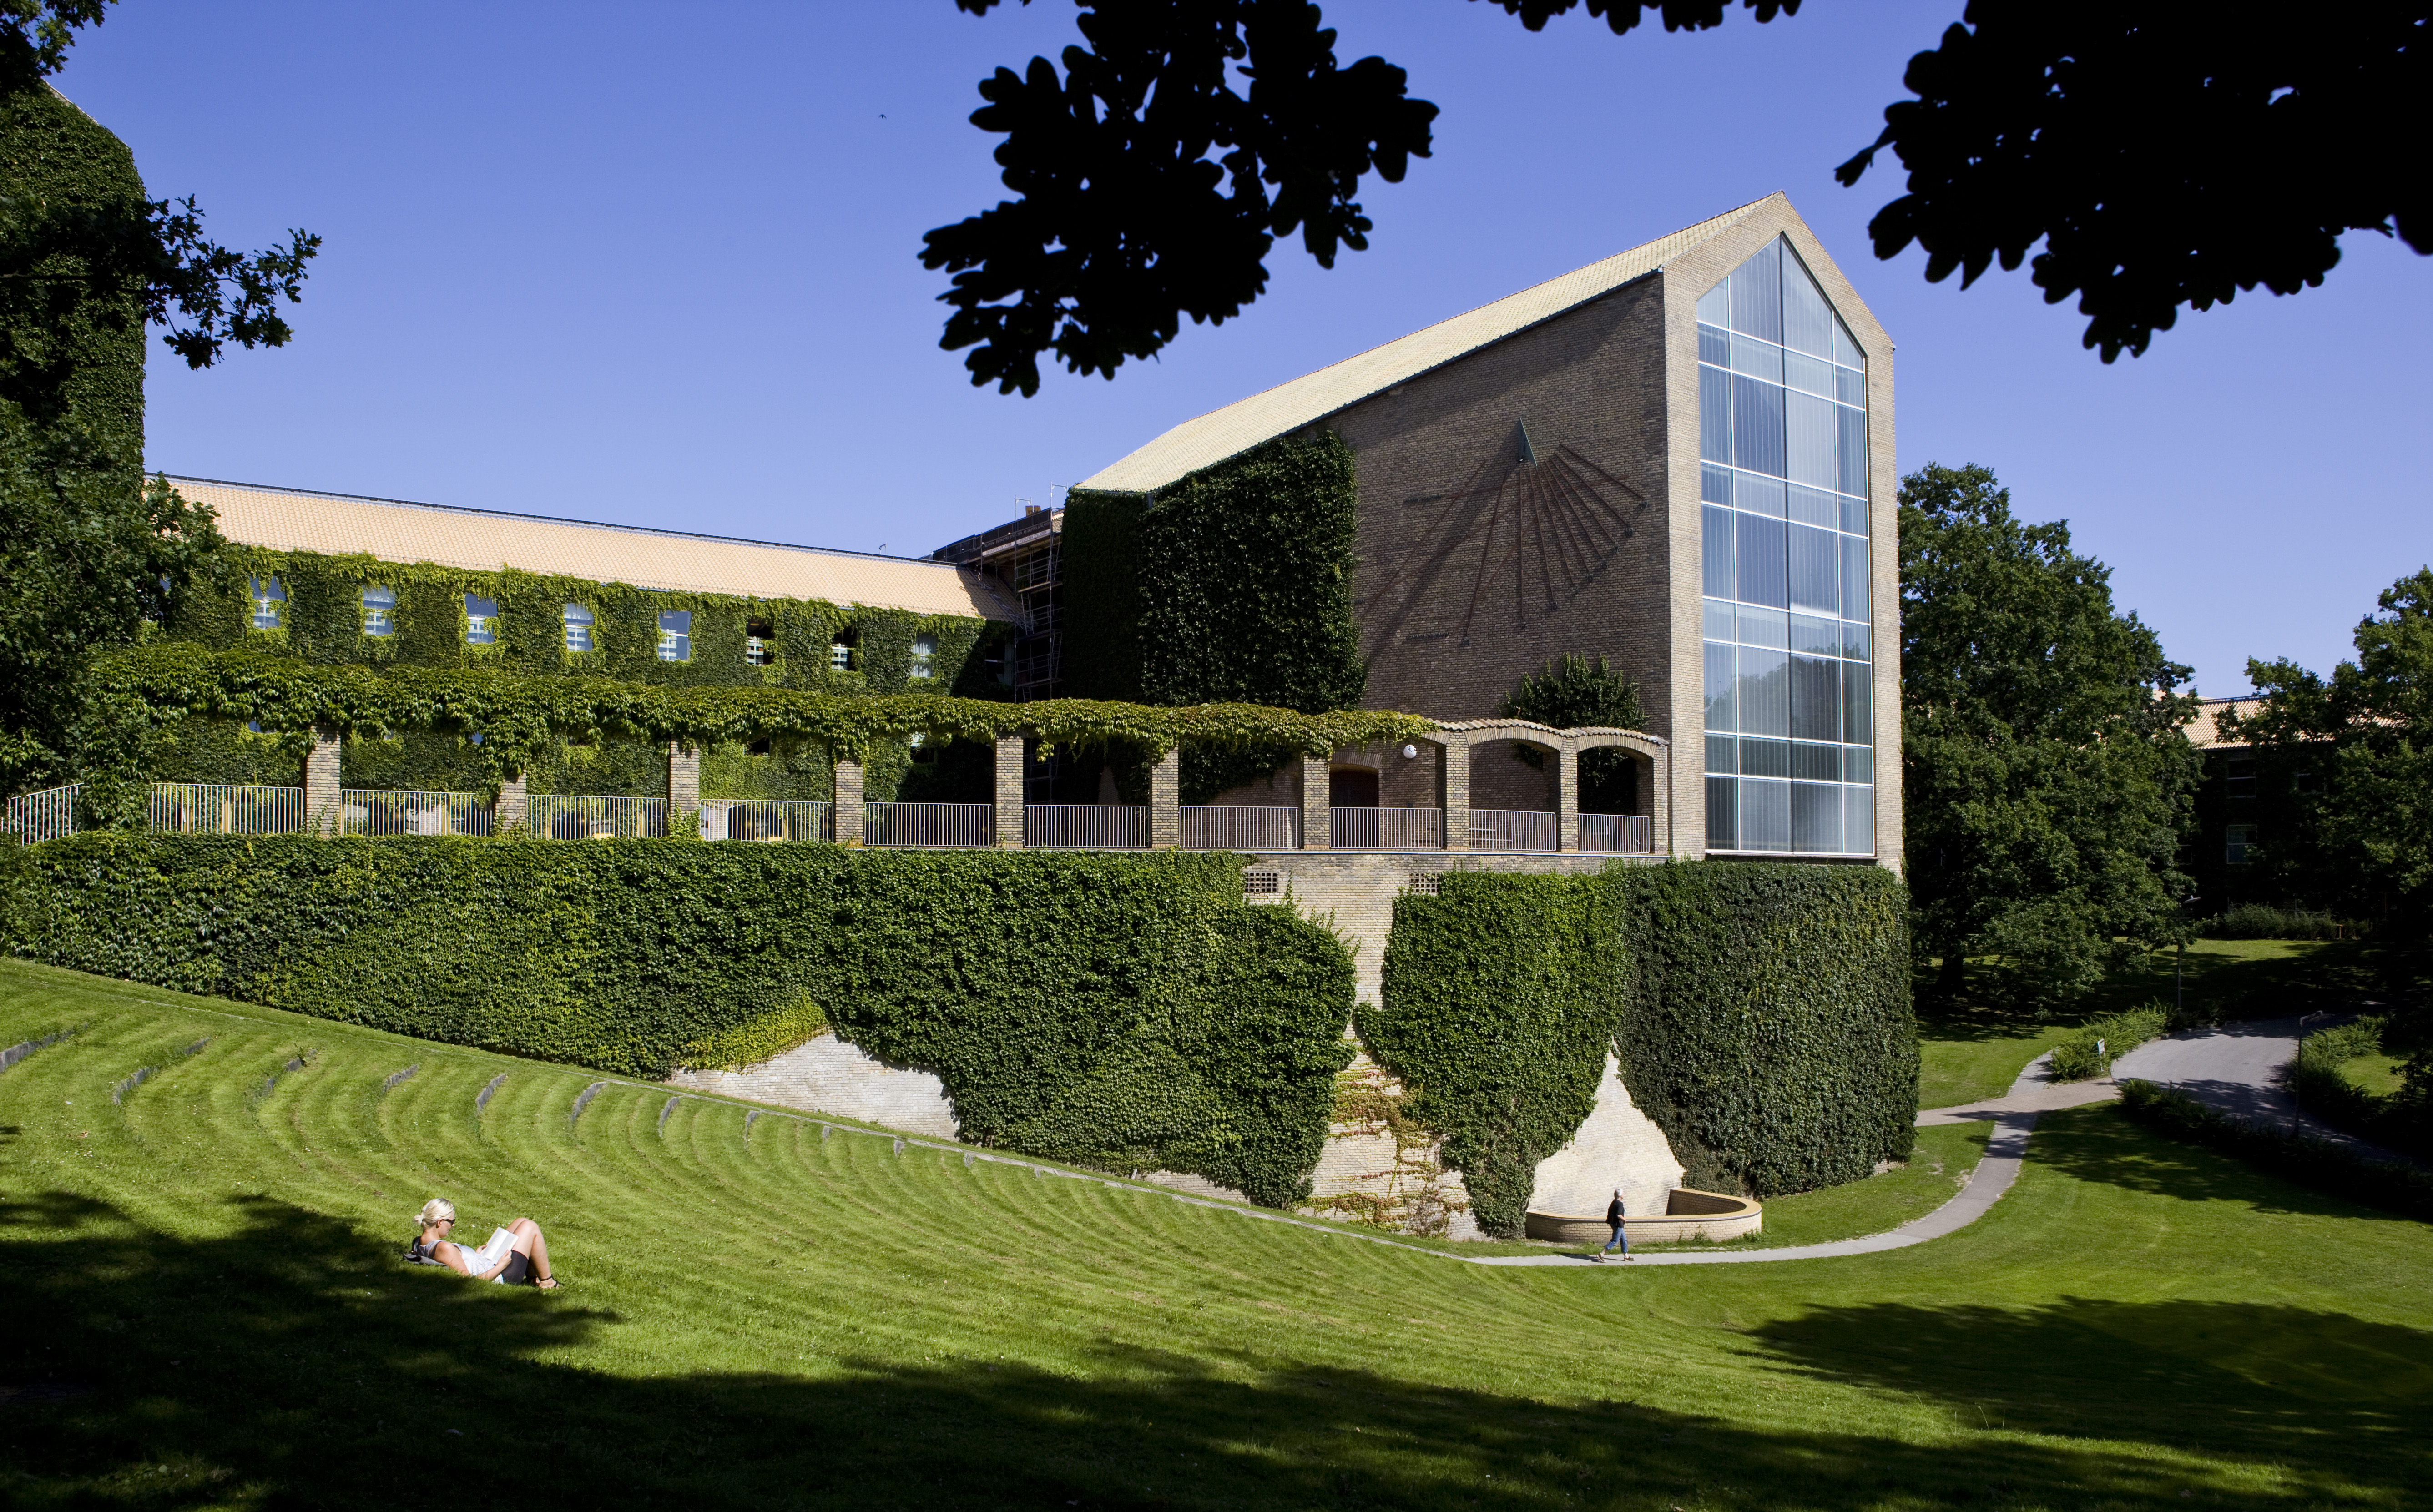 Aarhaus University in Denmark is one of the most beautiful universities in Europe